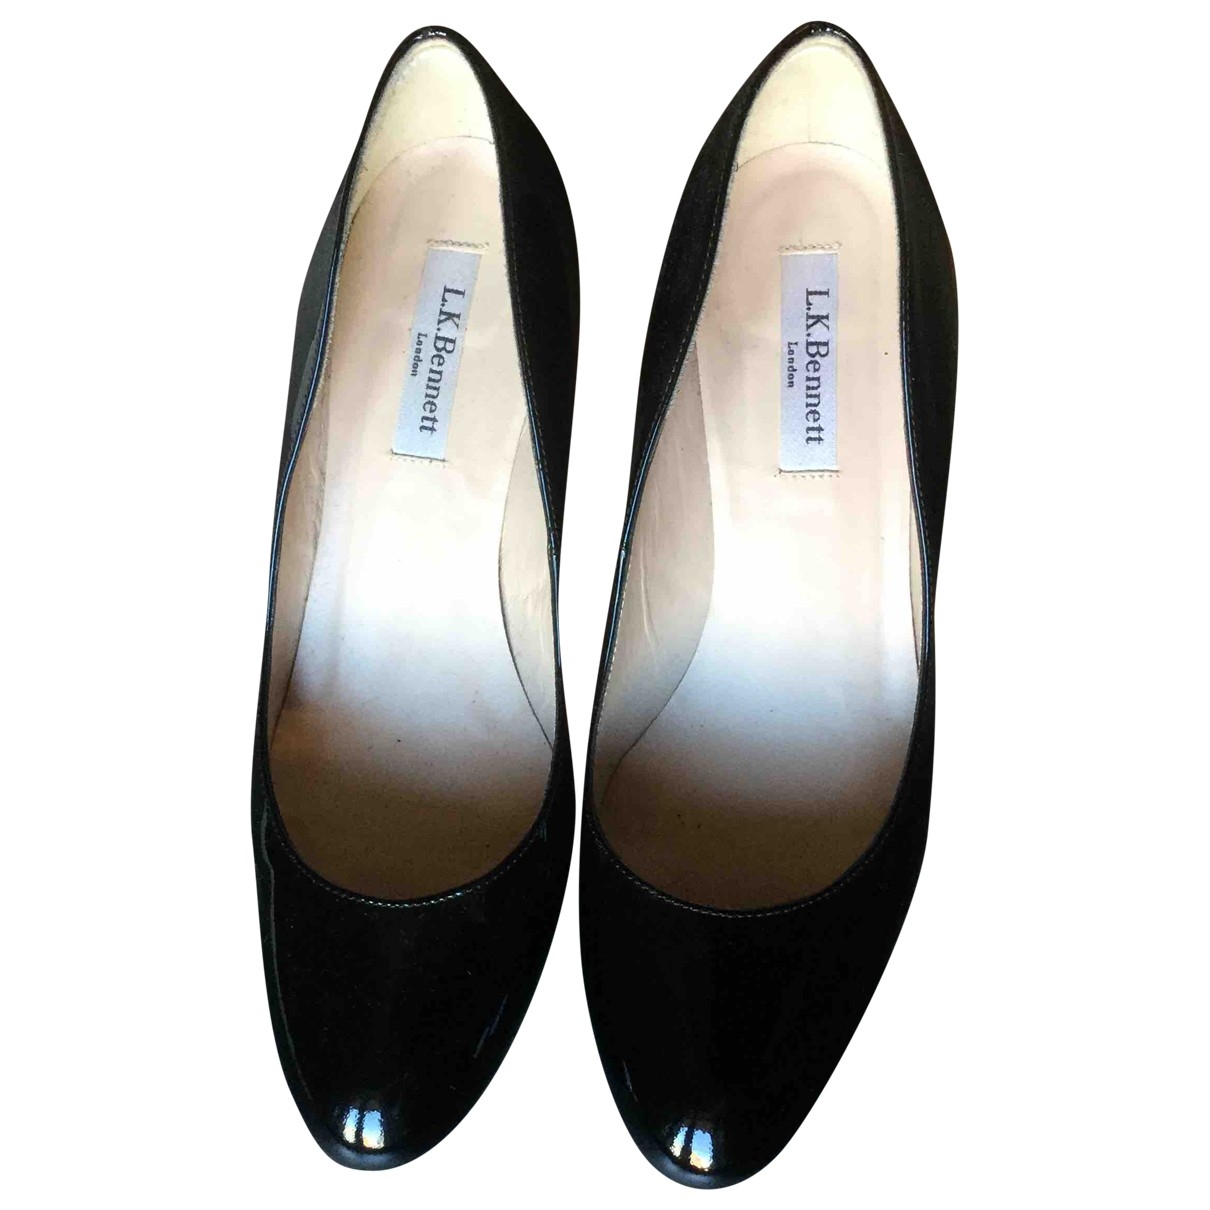 Lk Bennett Patent leather heels | Vestiaire Collective (Global)